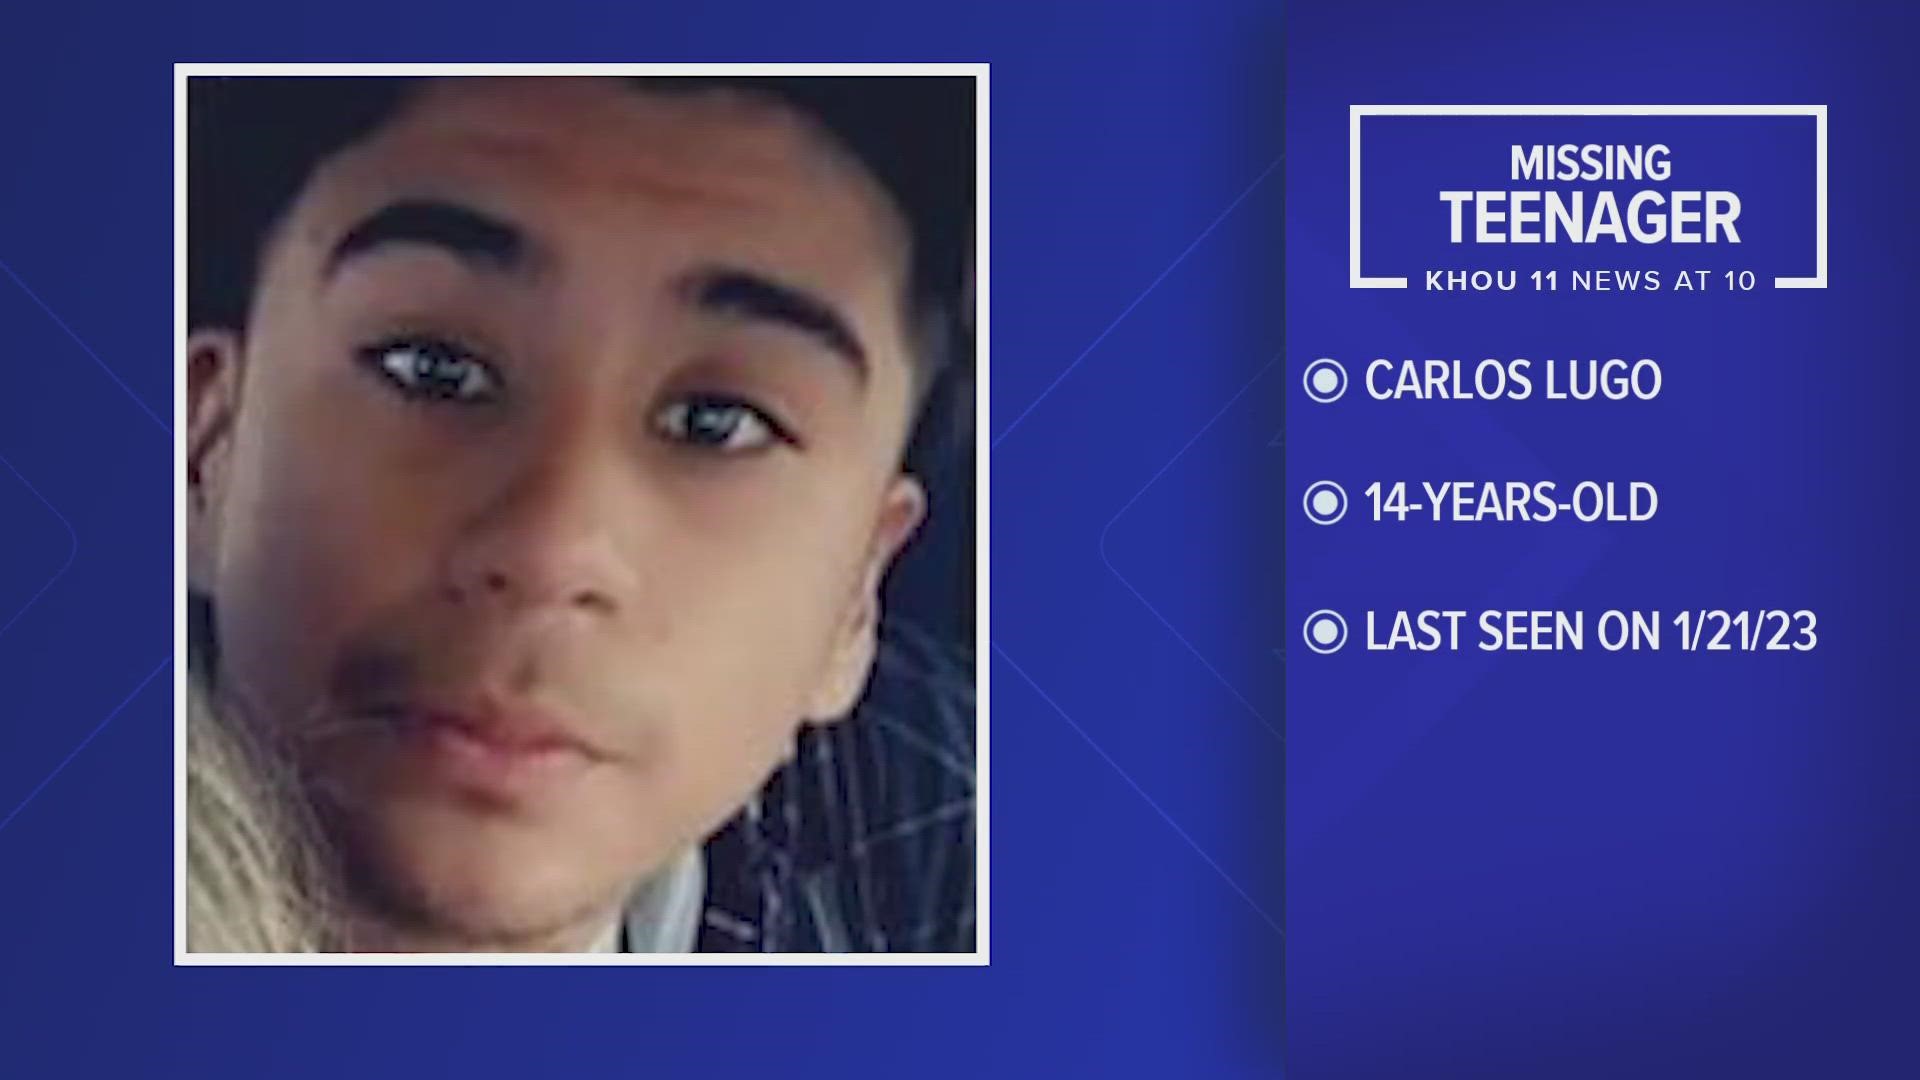 Carlos Lugo has been missing since Jan. 21.